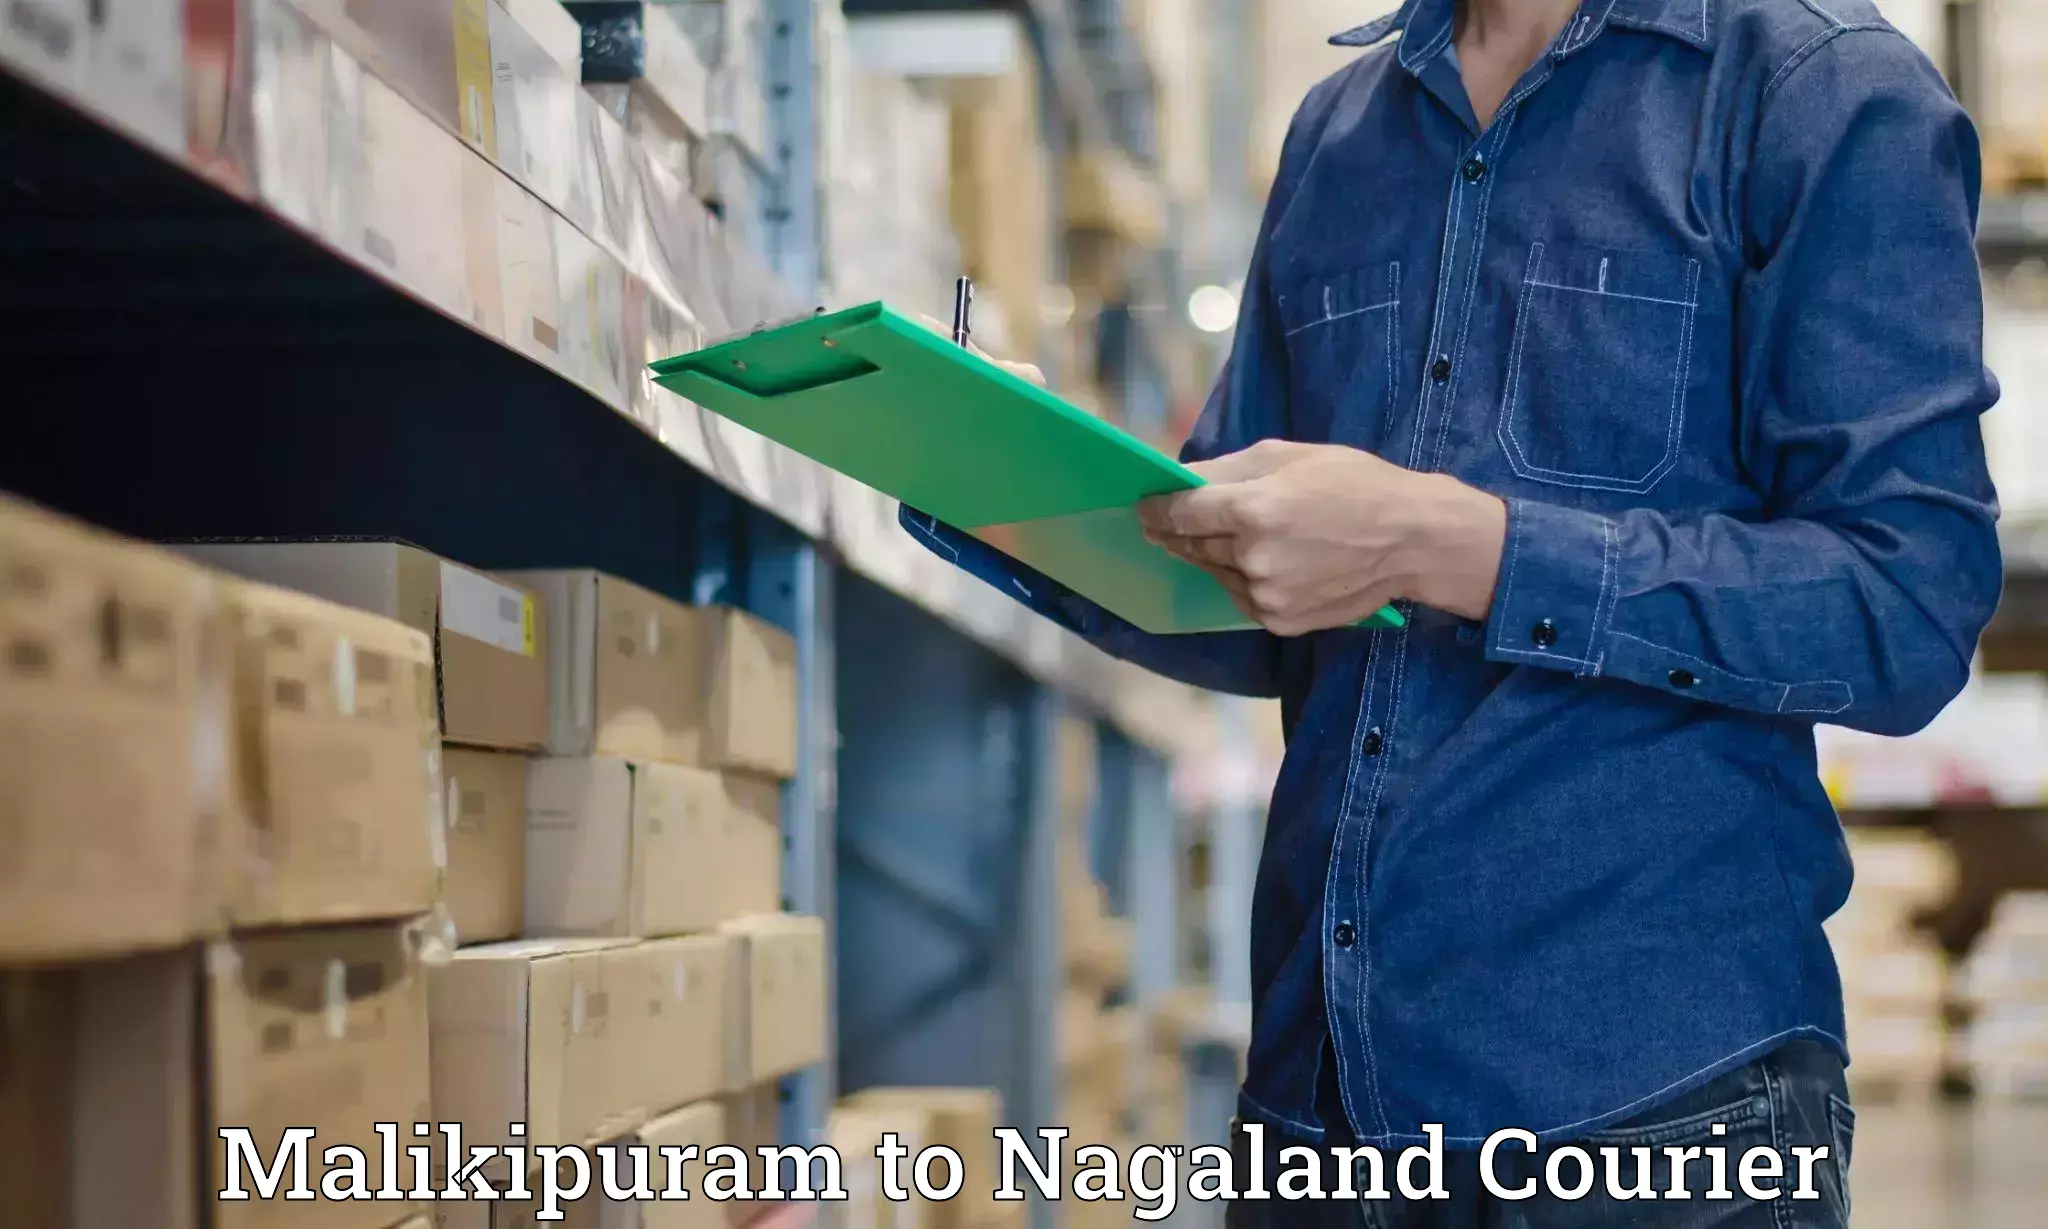 Professional courier handling Malikipuram to Nagaland